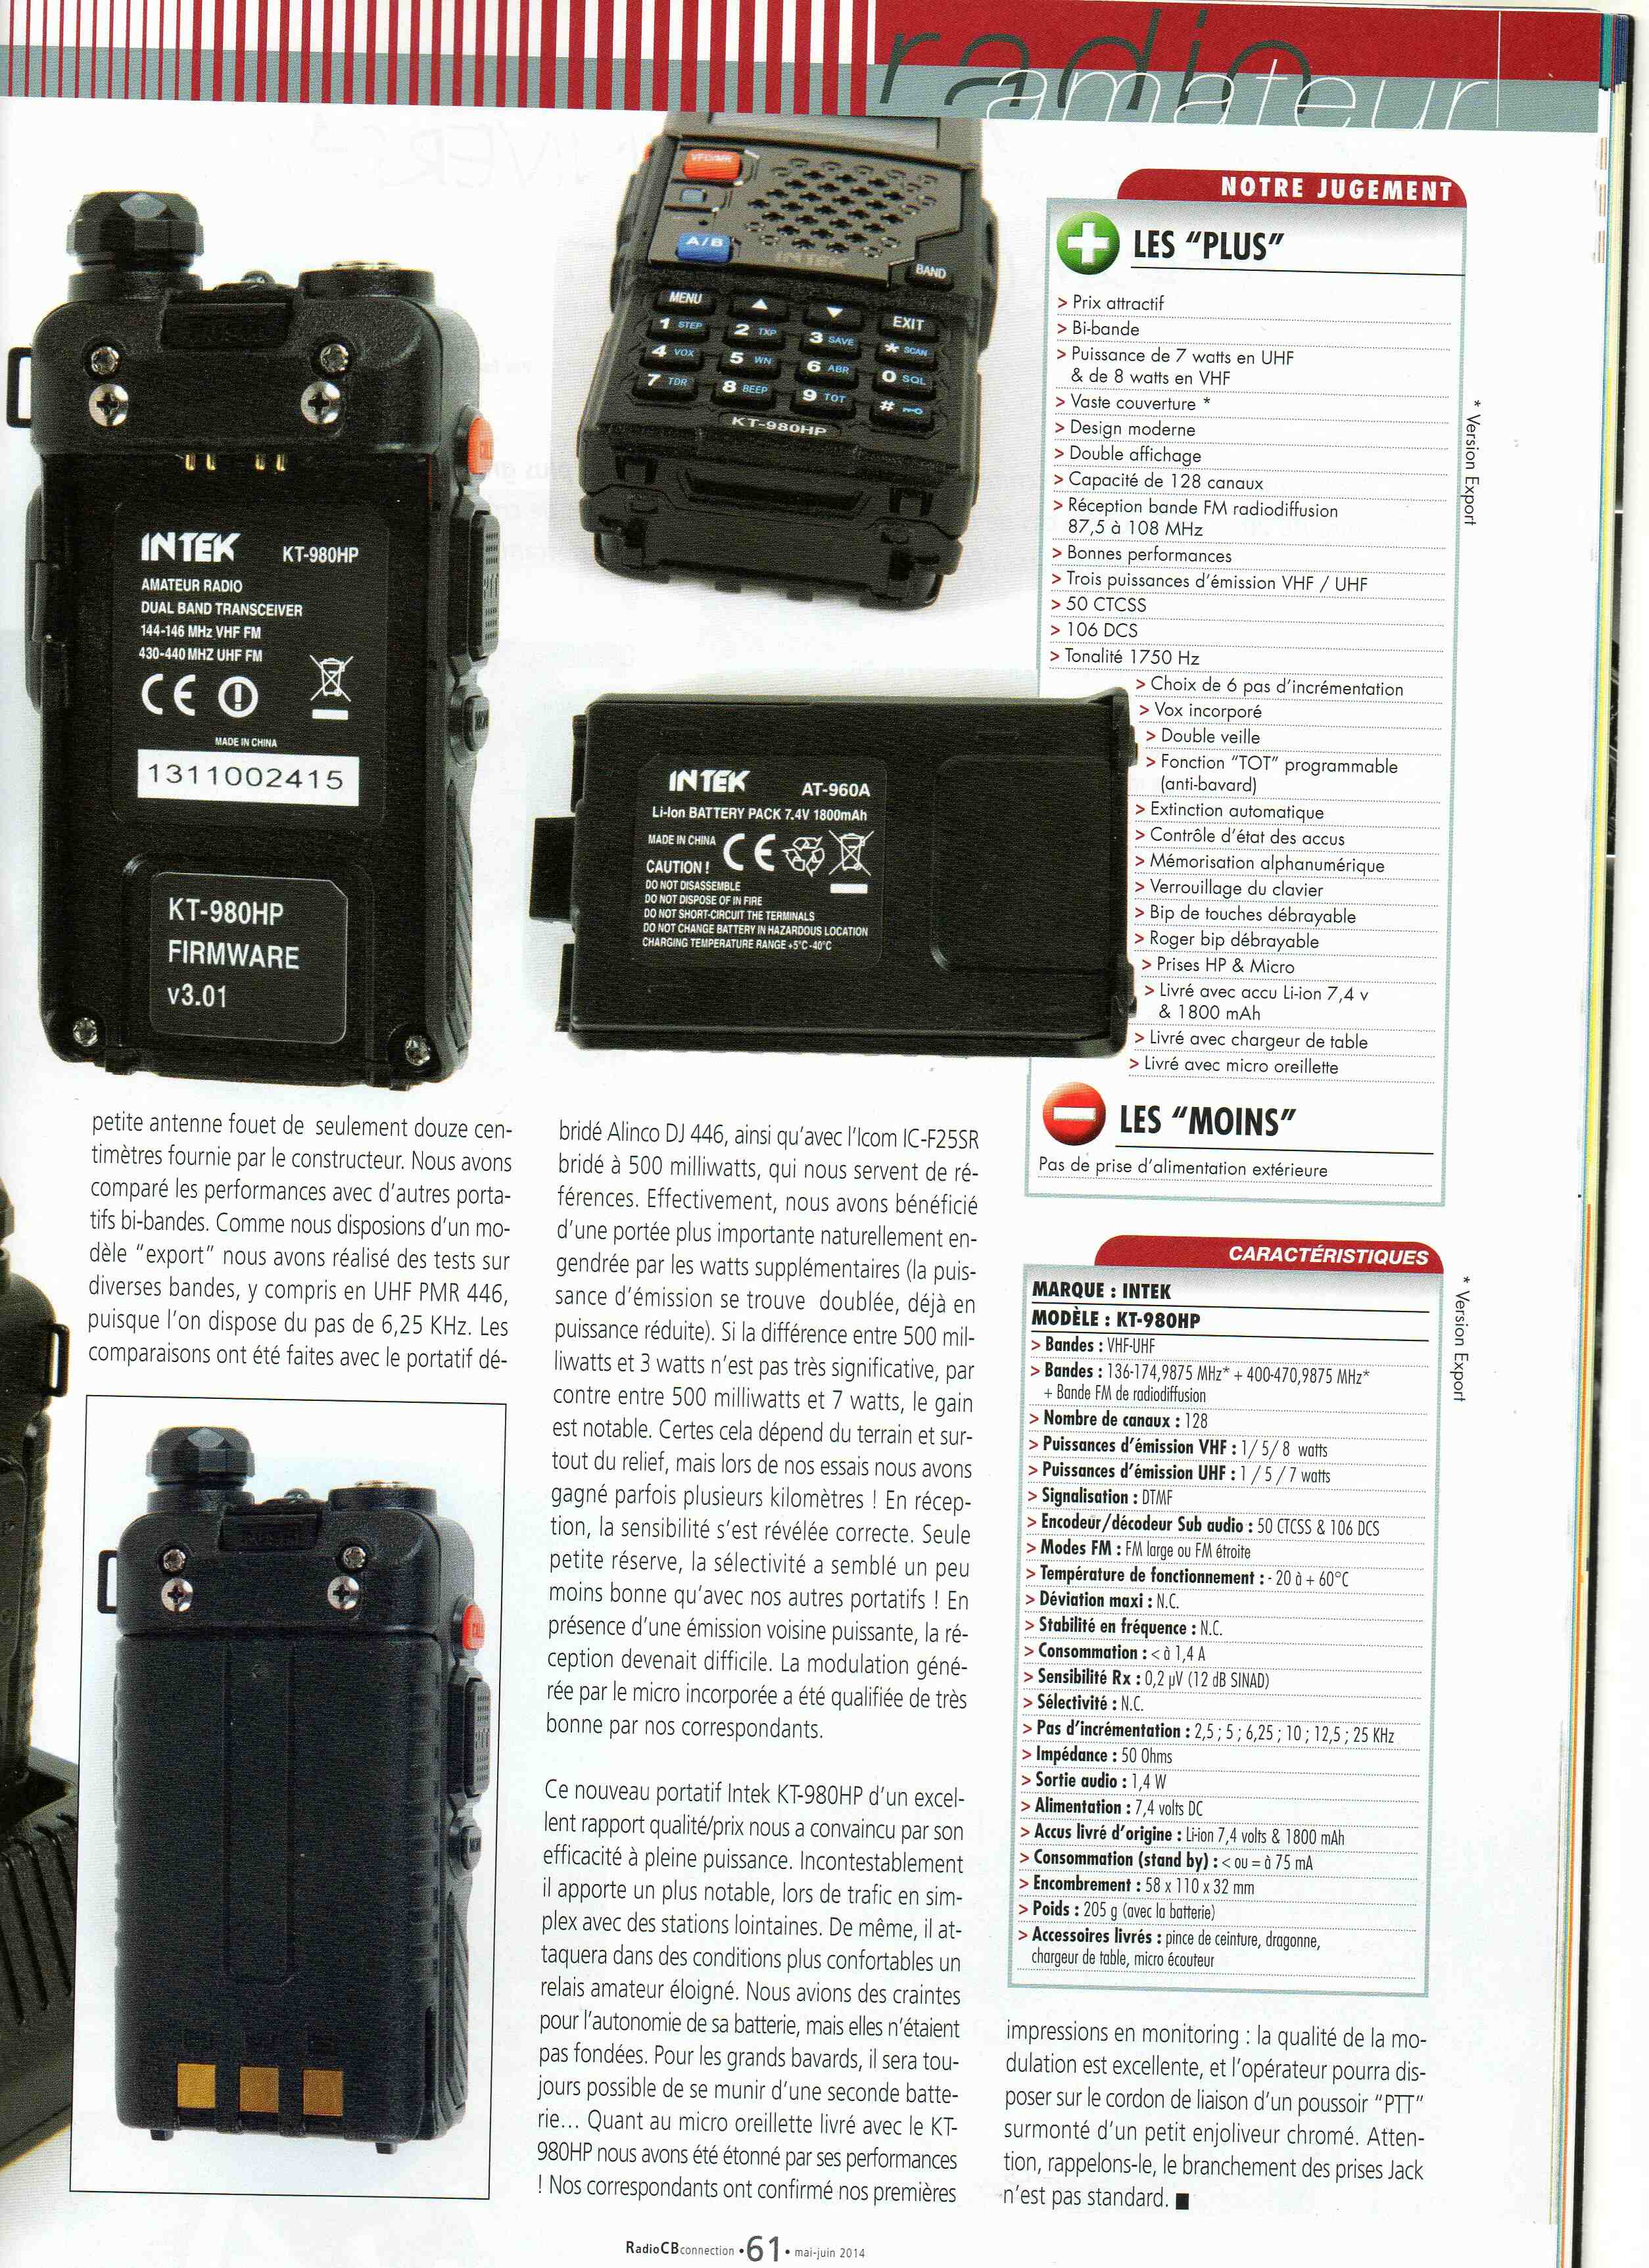 intek - Intek KT-980HP (Portable) Img94710